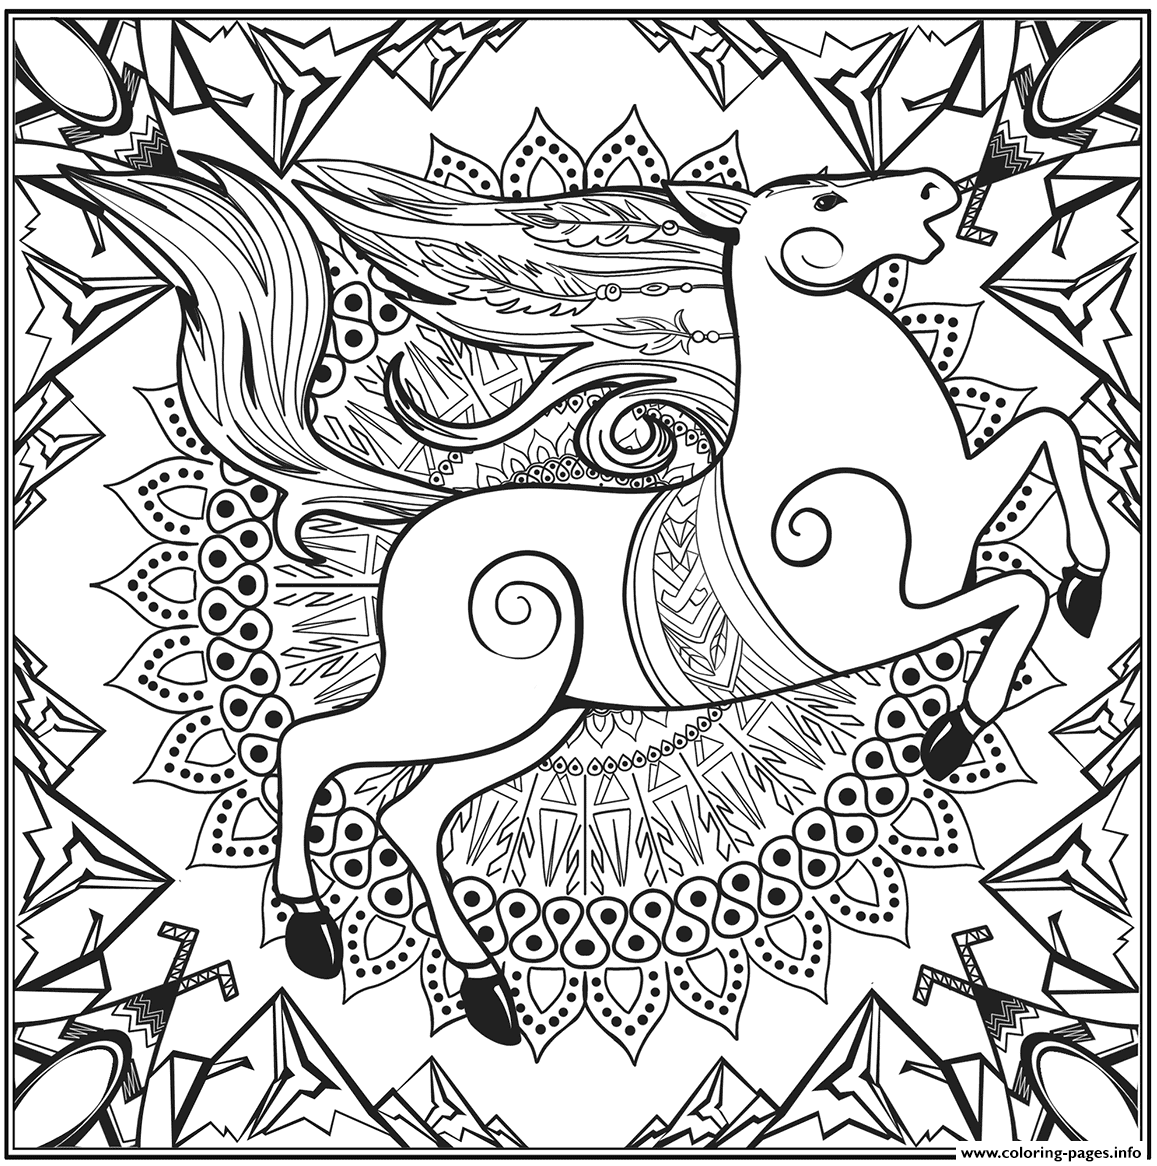 Horse Mandala Animal coloring